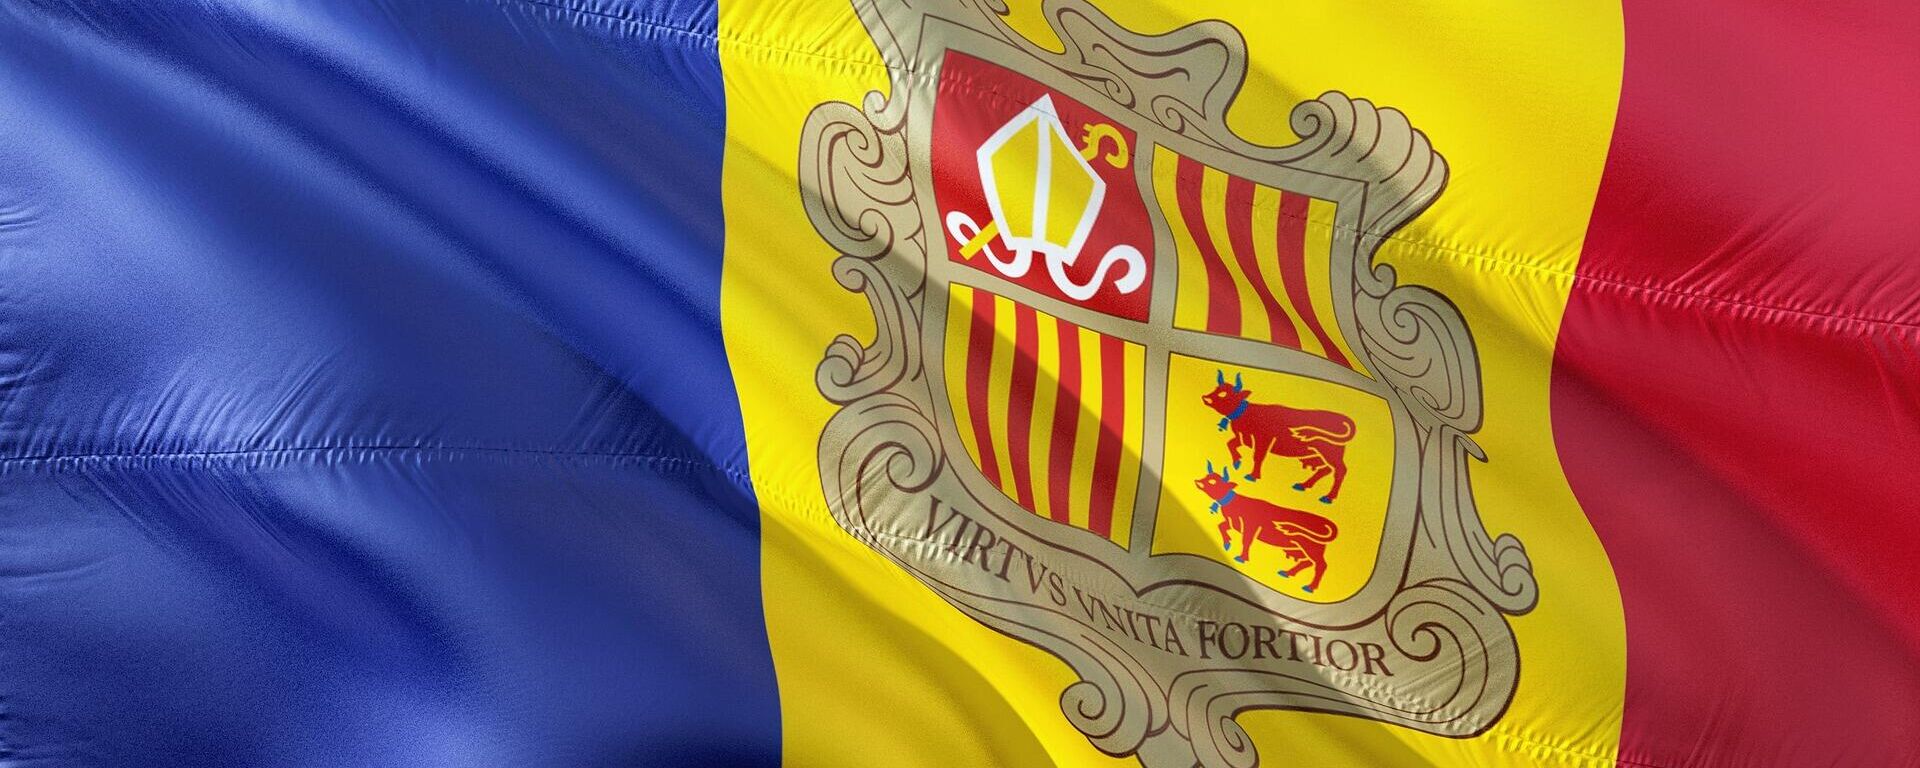 La bandera de Andorra - Sputnik Mundo, 1920, 12.02.2021